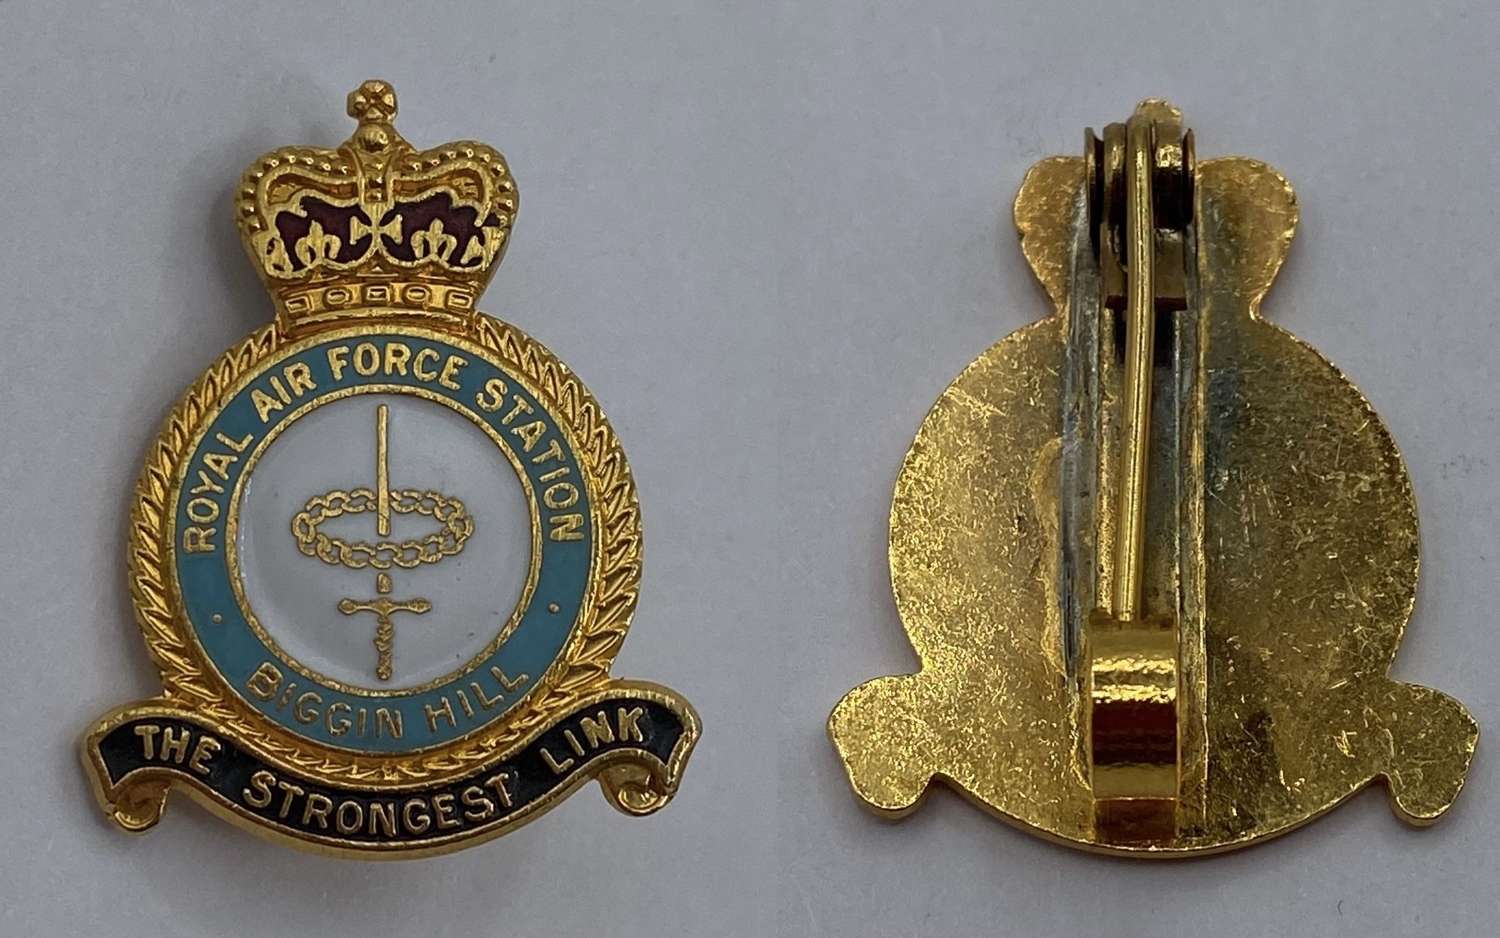 Post WW2 RAF Royal Air Force Station Biggin Hill Strongest Link Badge